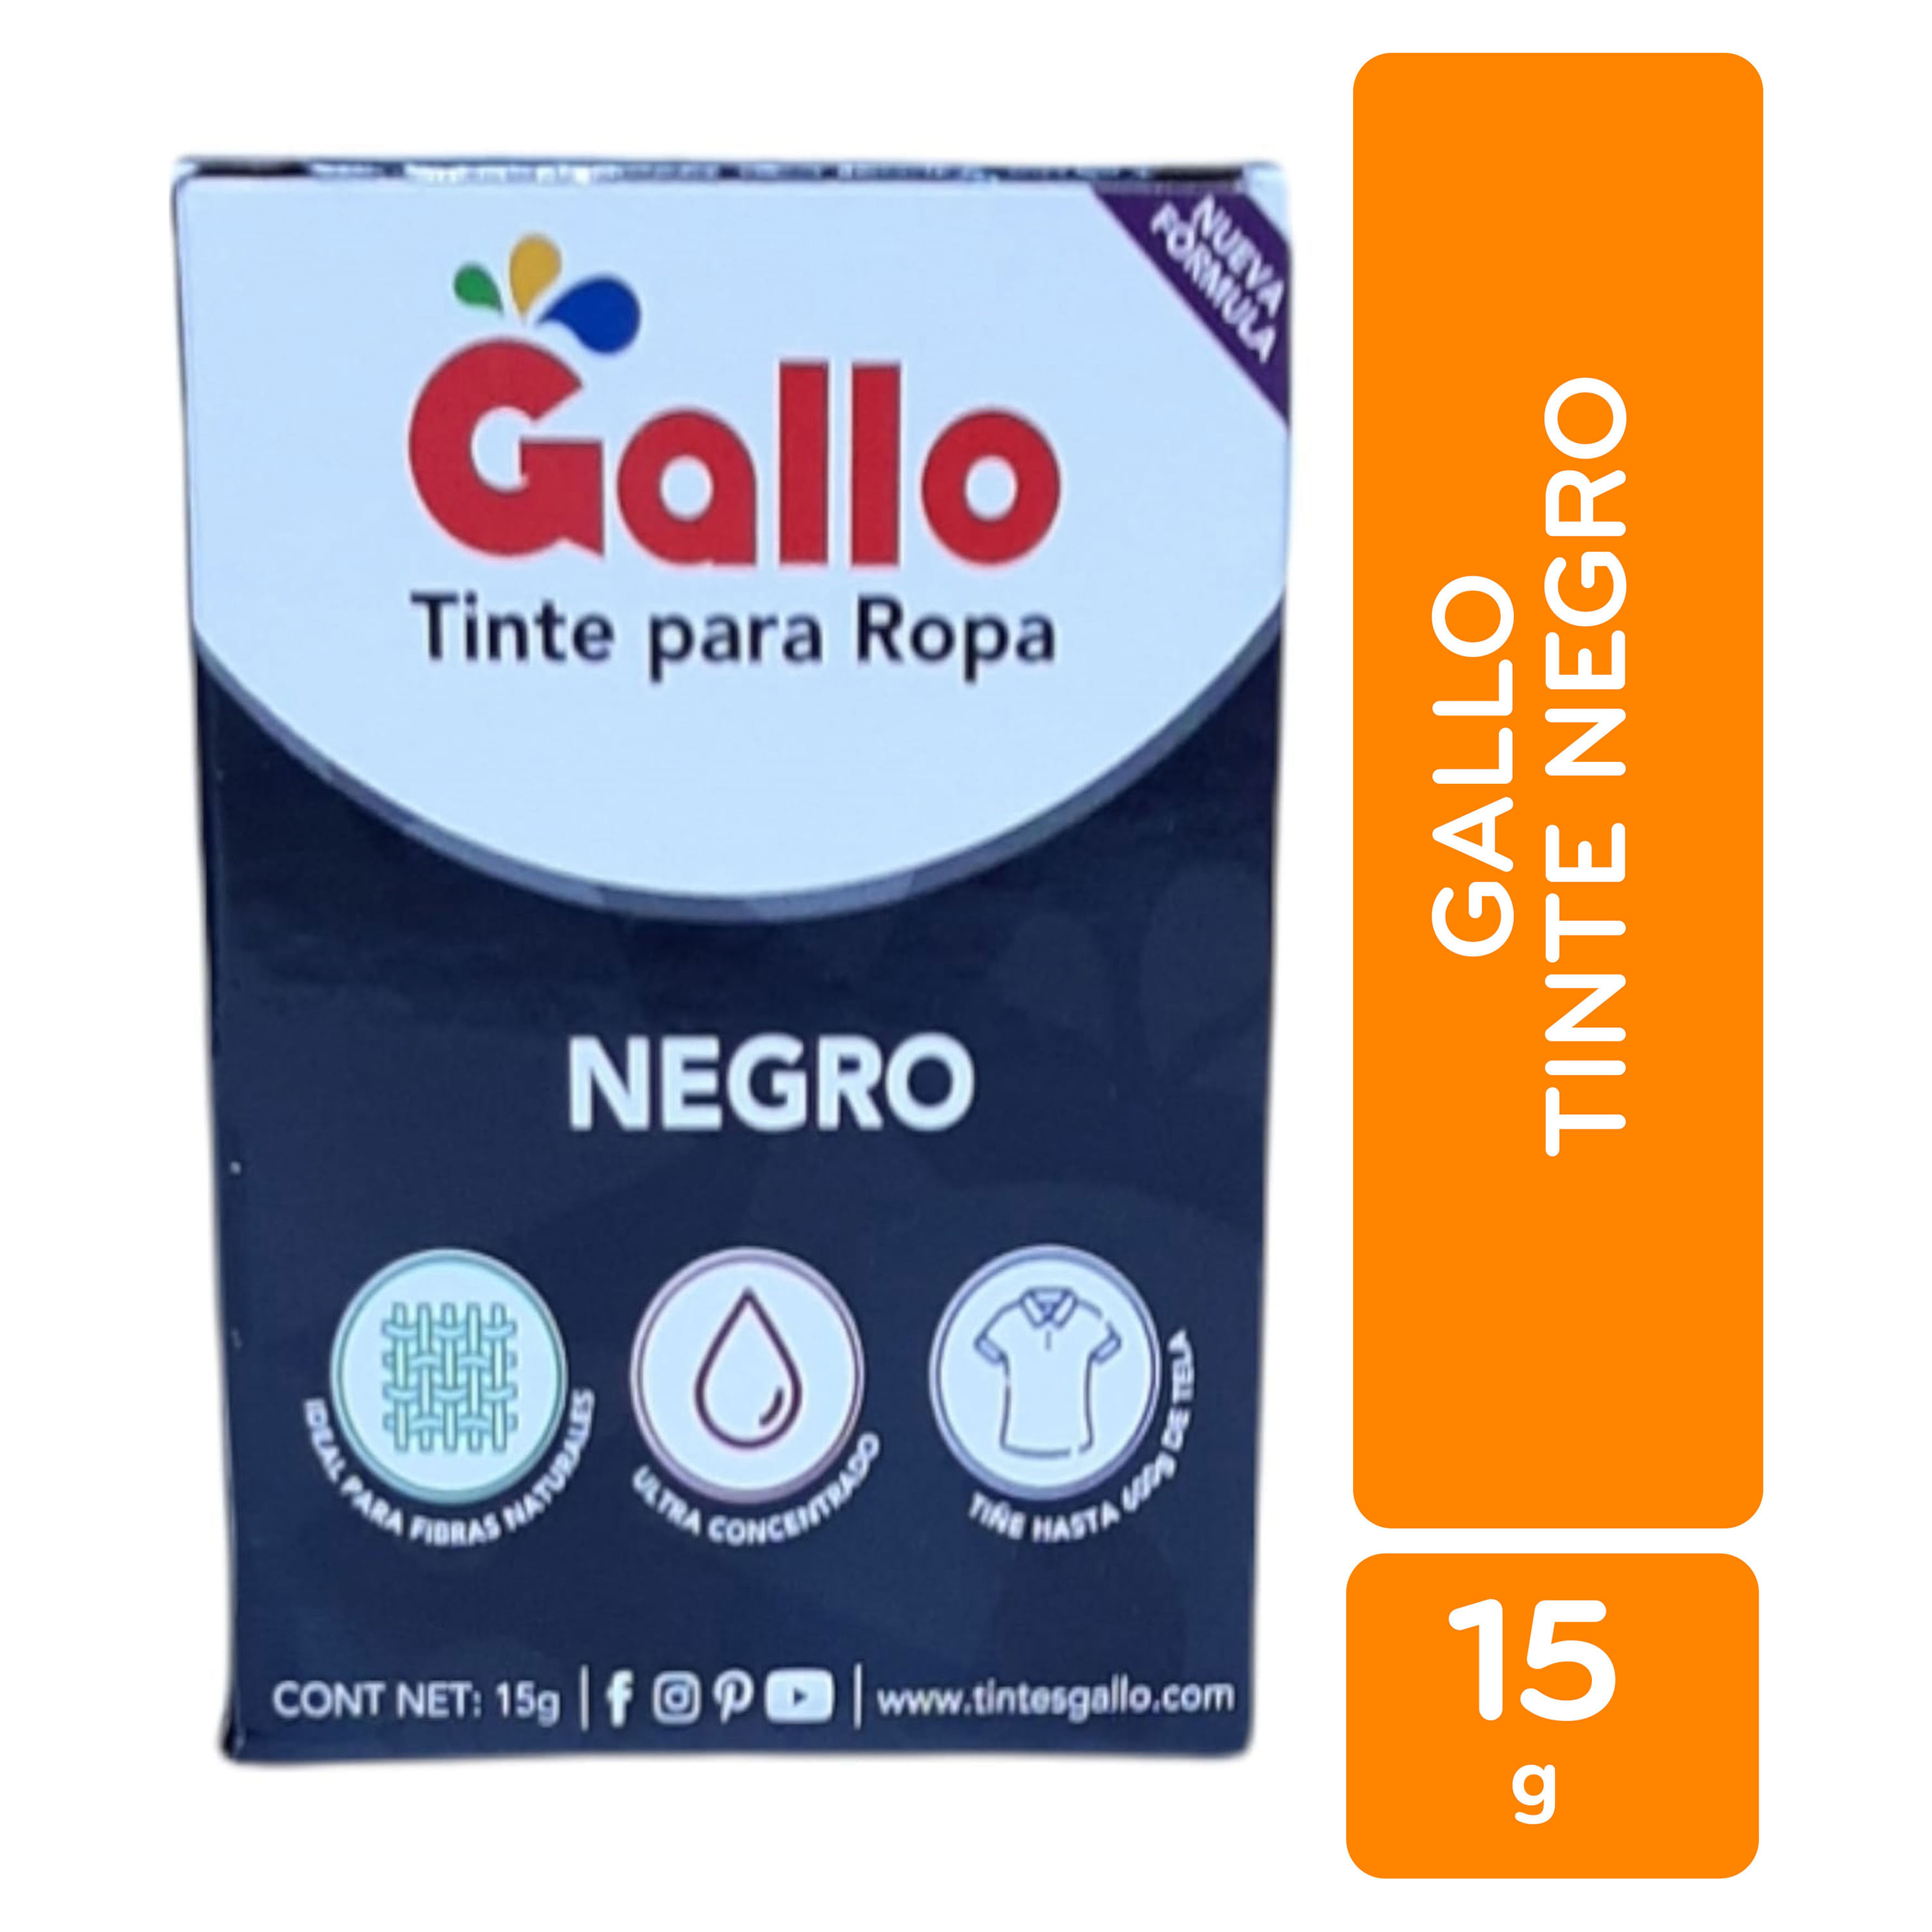 Tinte Para Ropa Color Negro - 15gr | Walmart Honduras